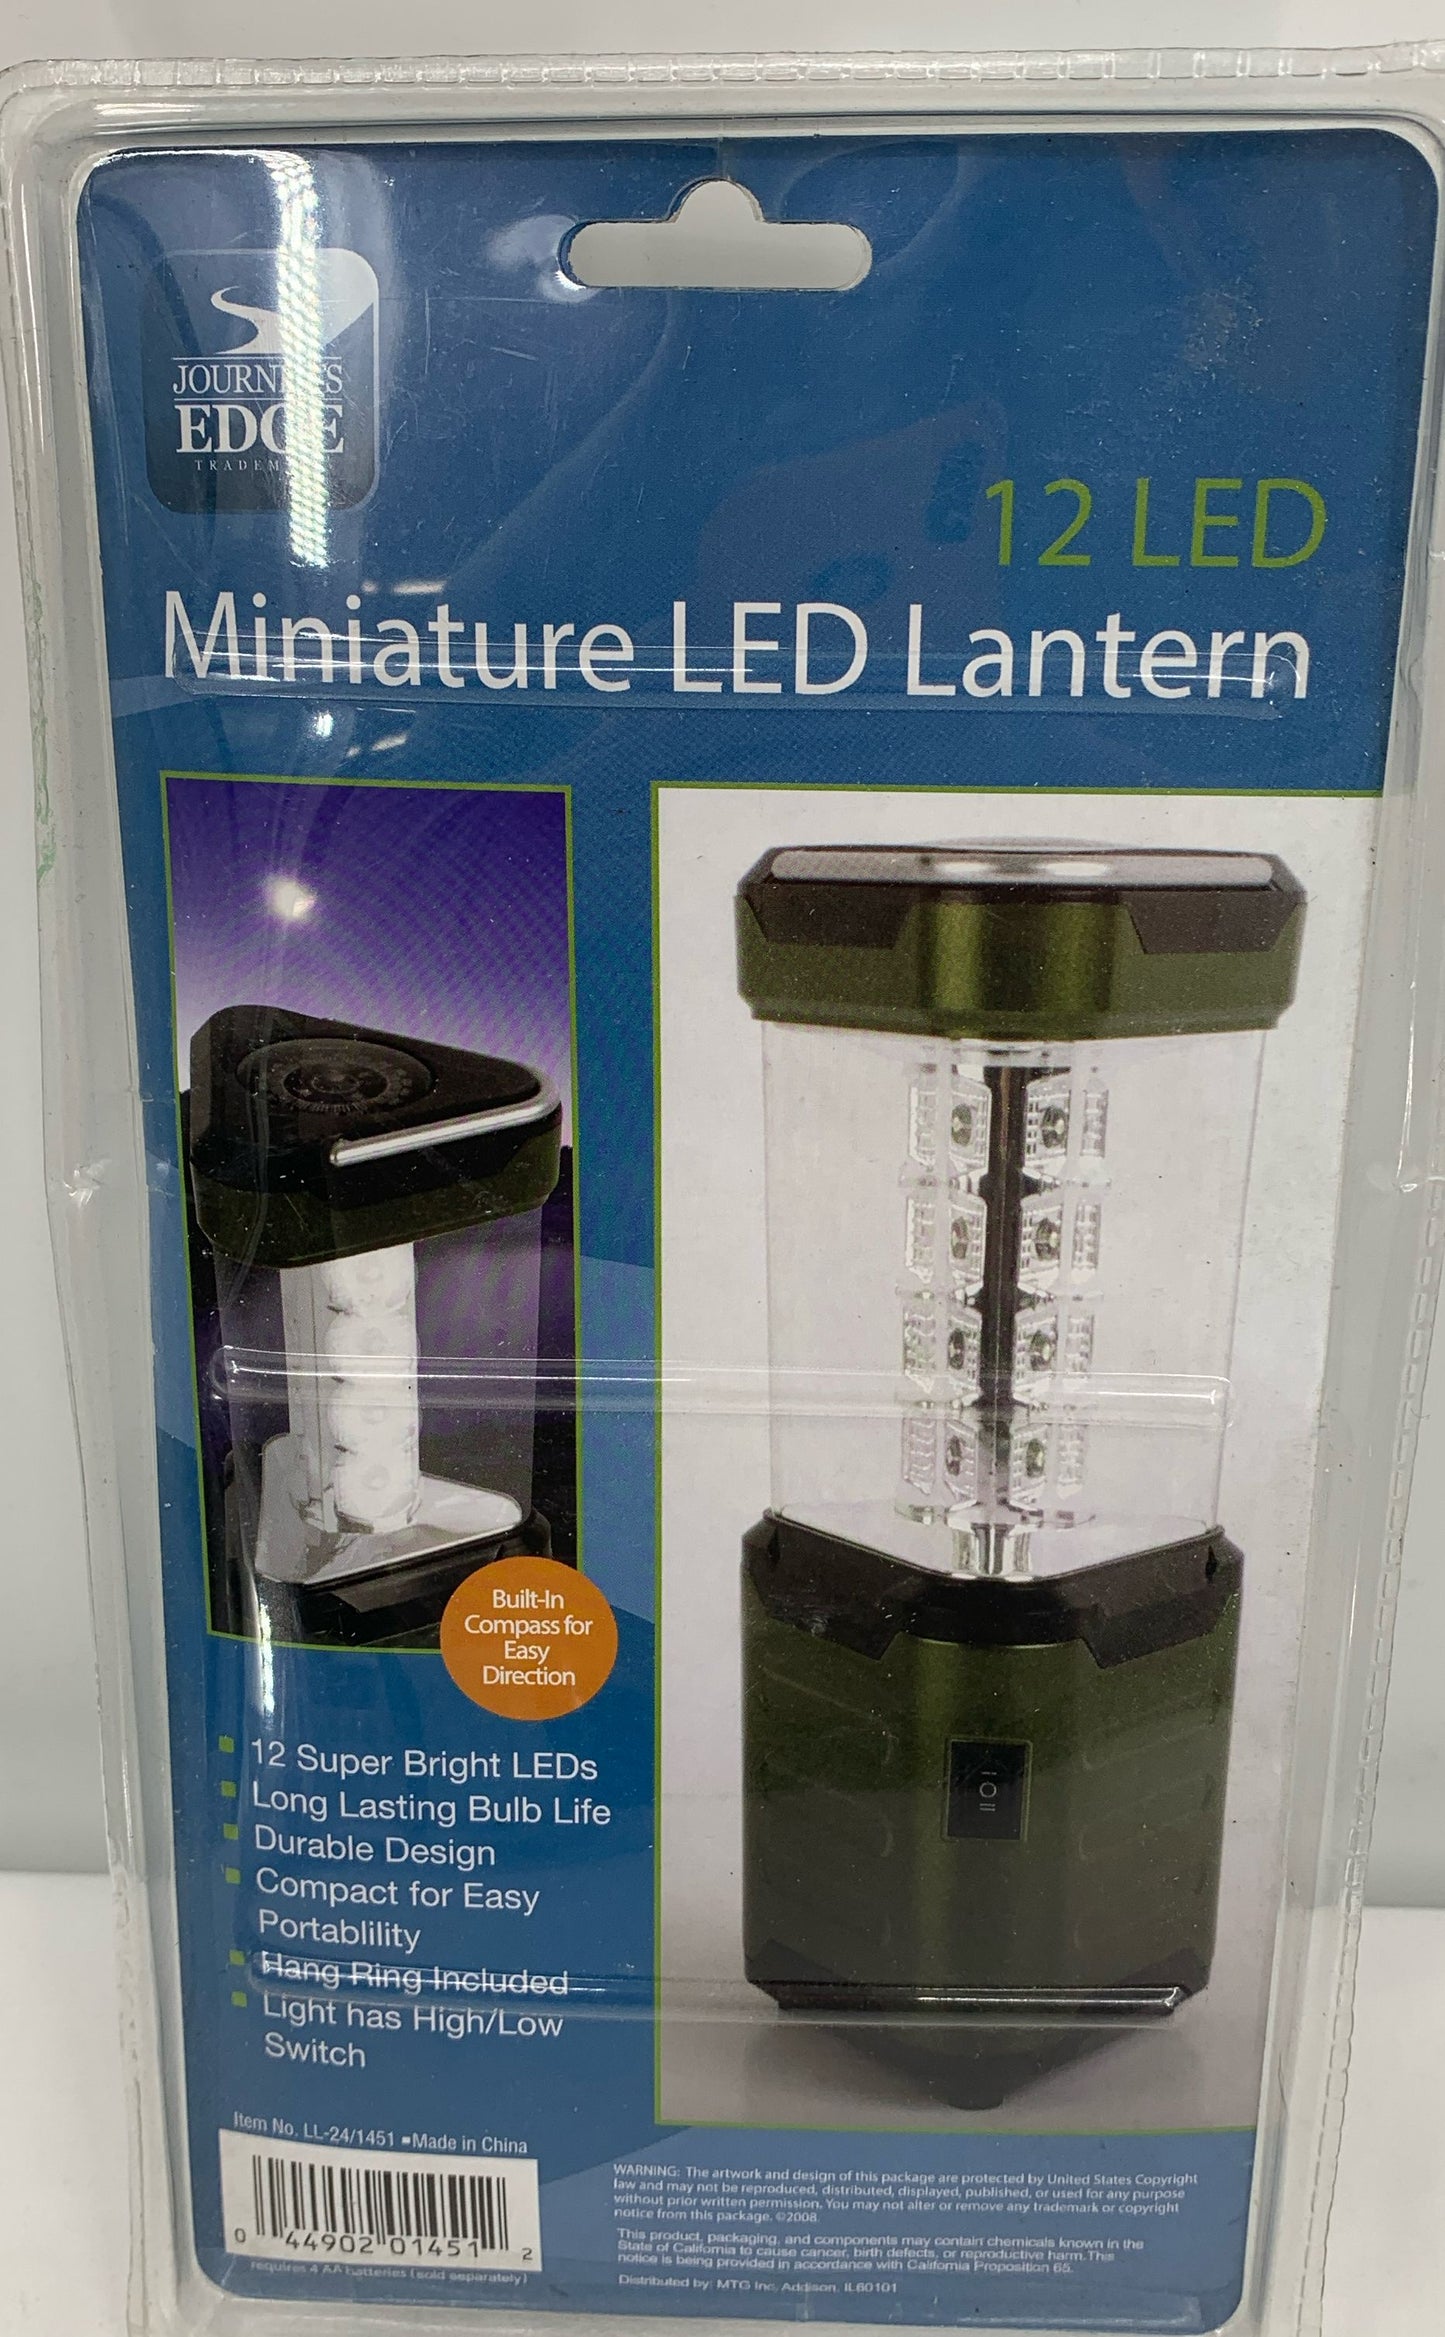 LED Lights Lot Of 3, Miniature Lanterns And Self Adhesive Push Lights New